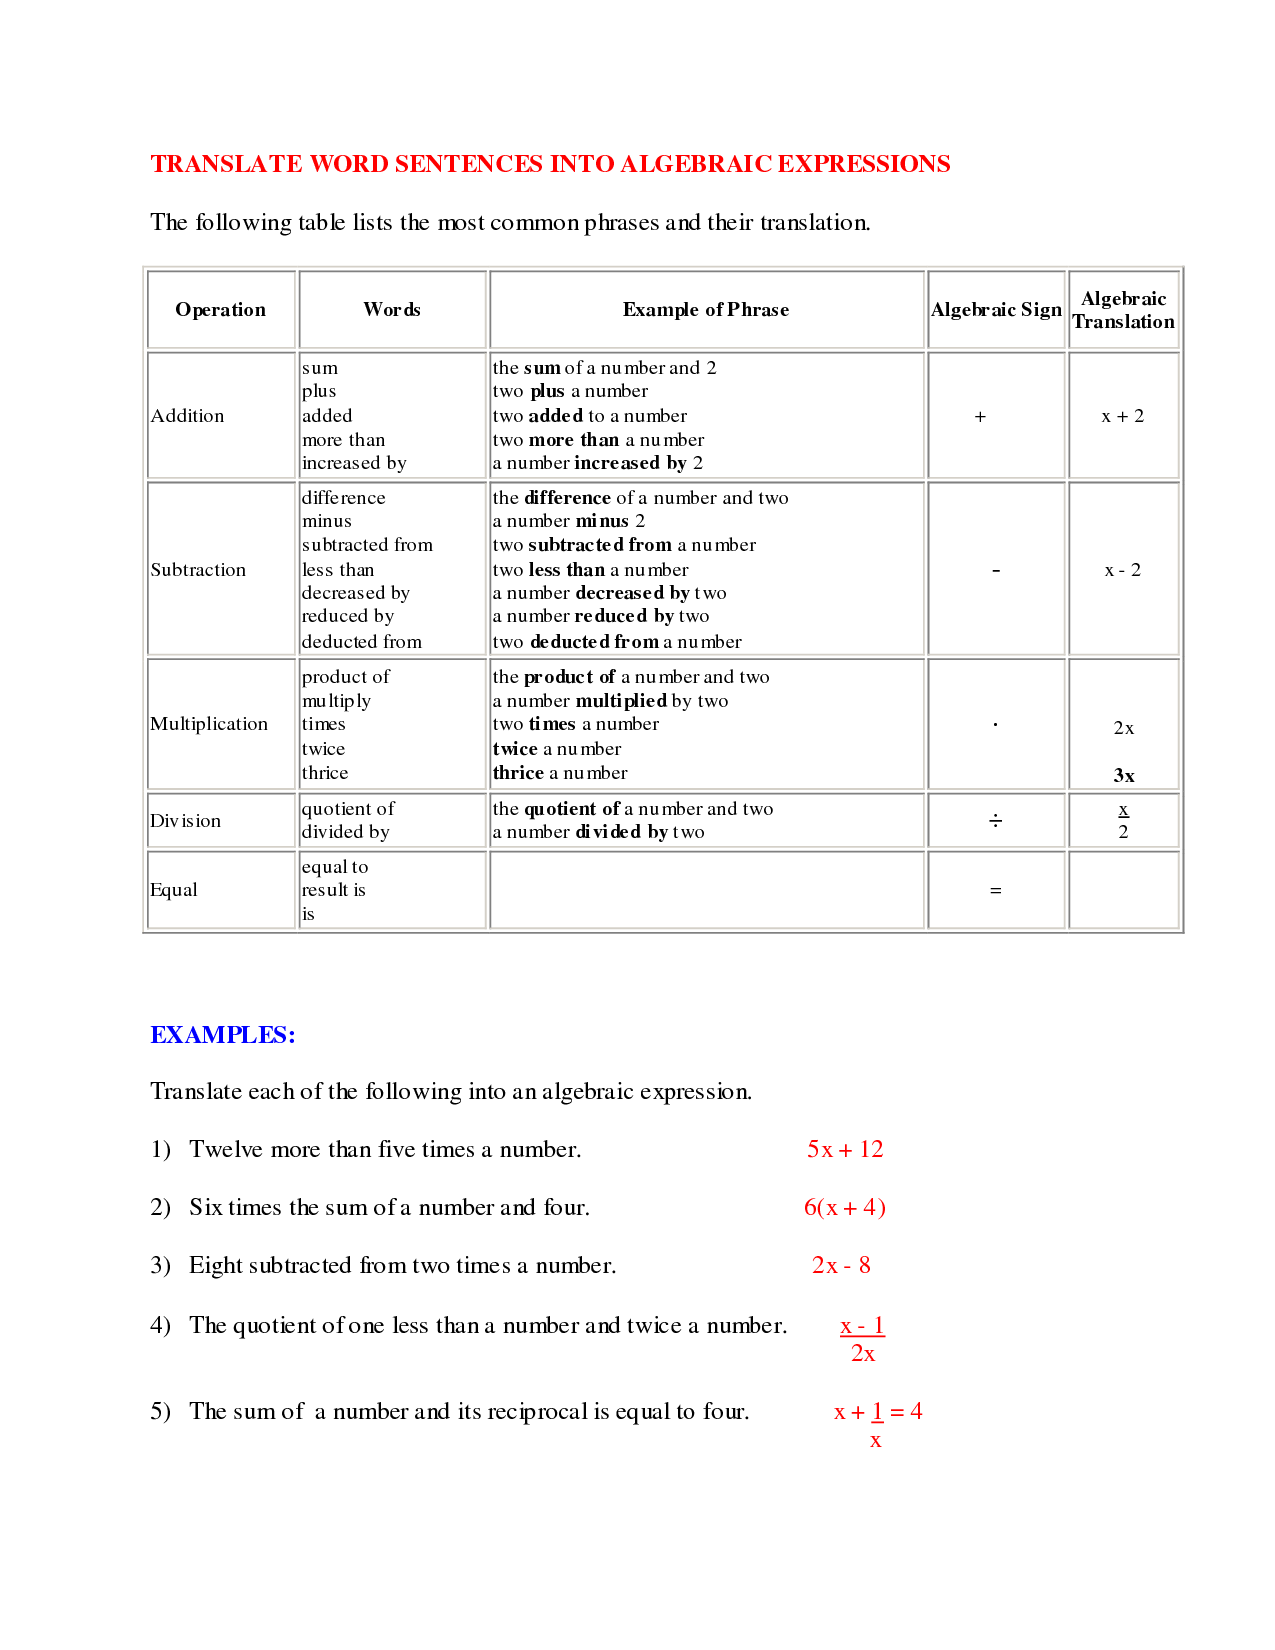 Translating Mathematical Phrases To Algebraic Expressions Worksheet Pdf